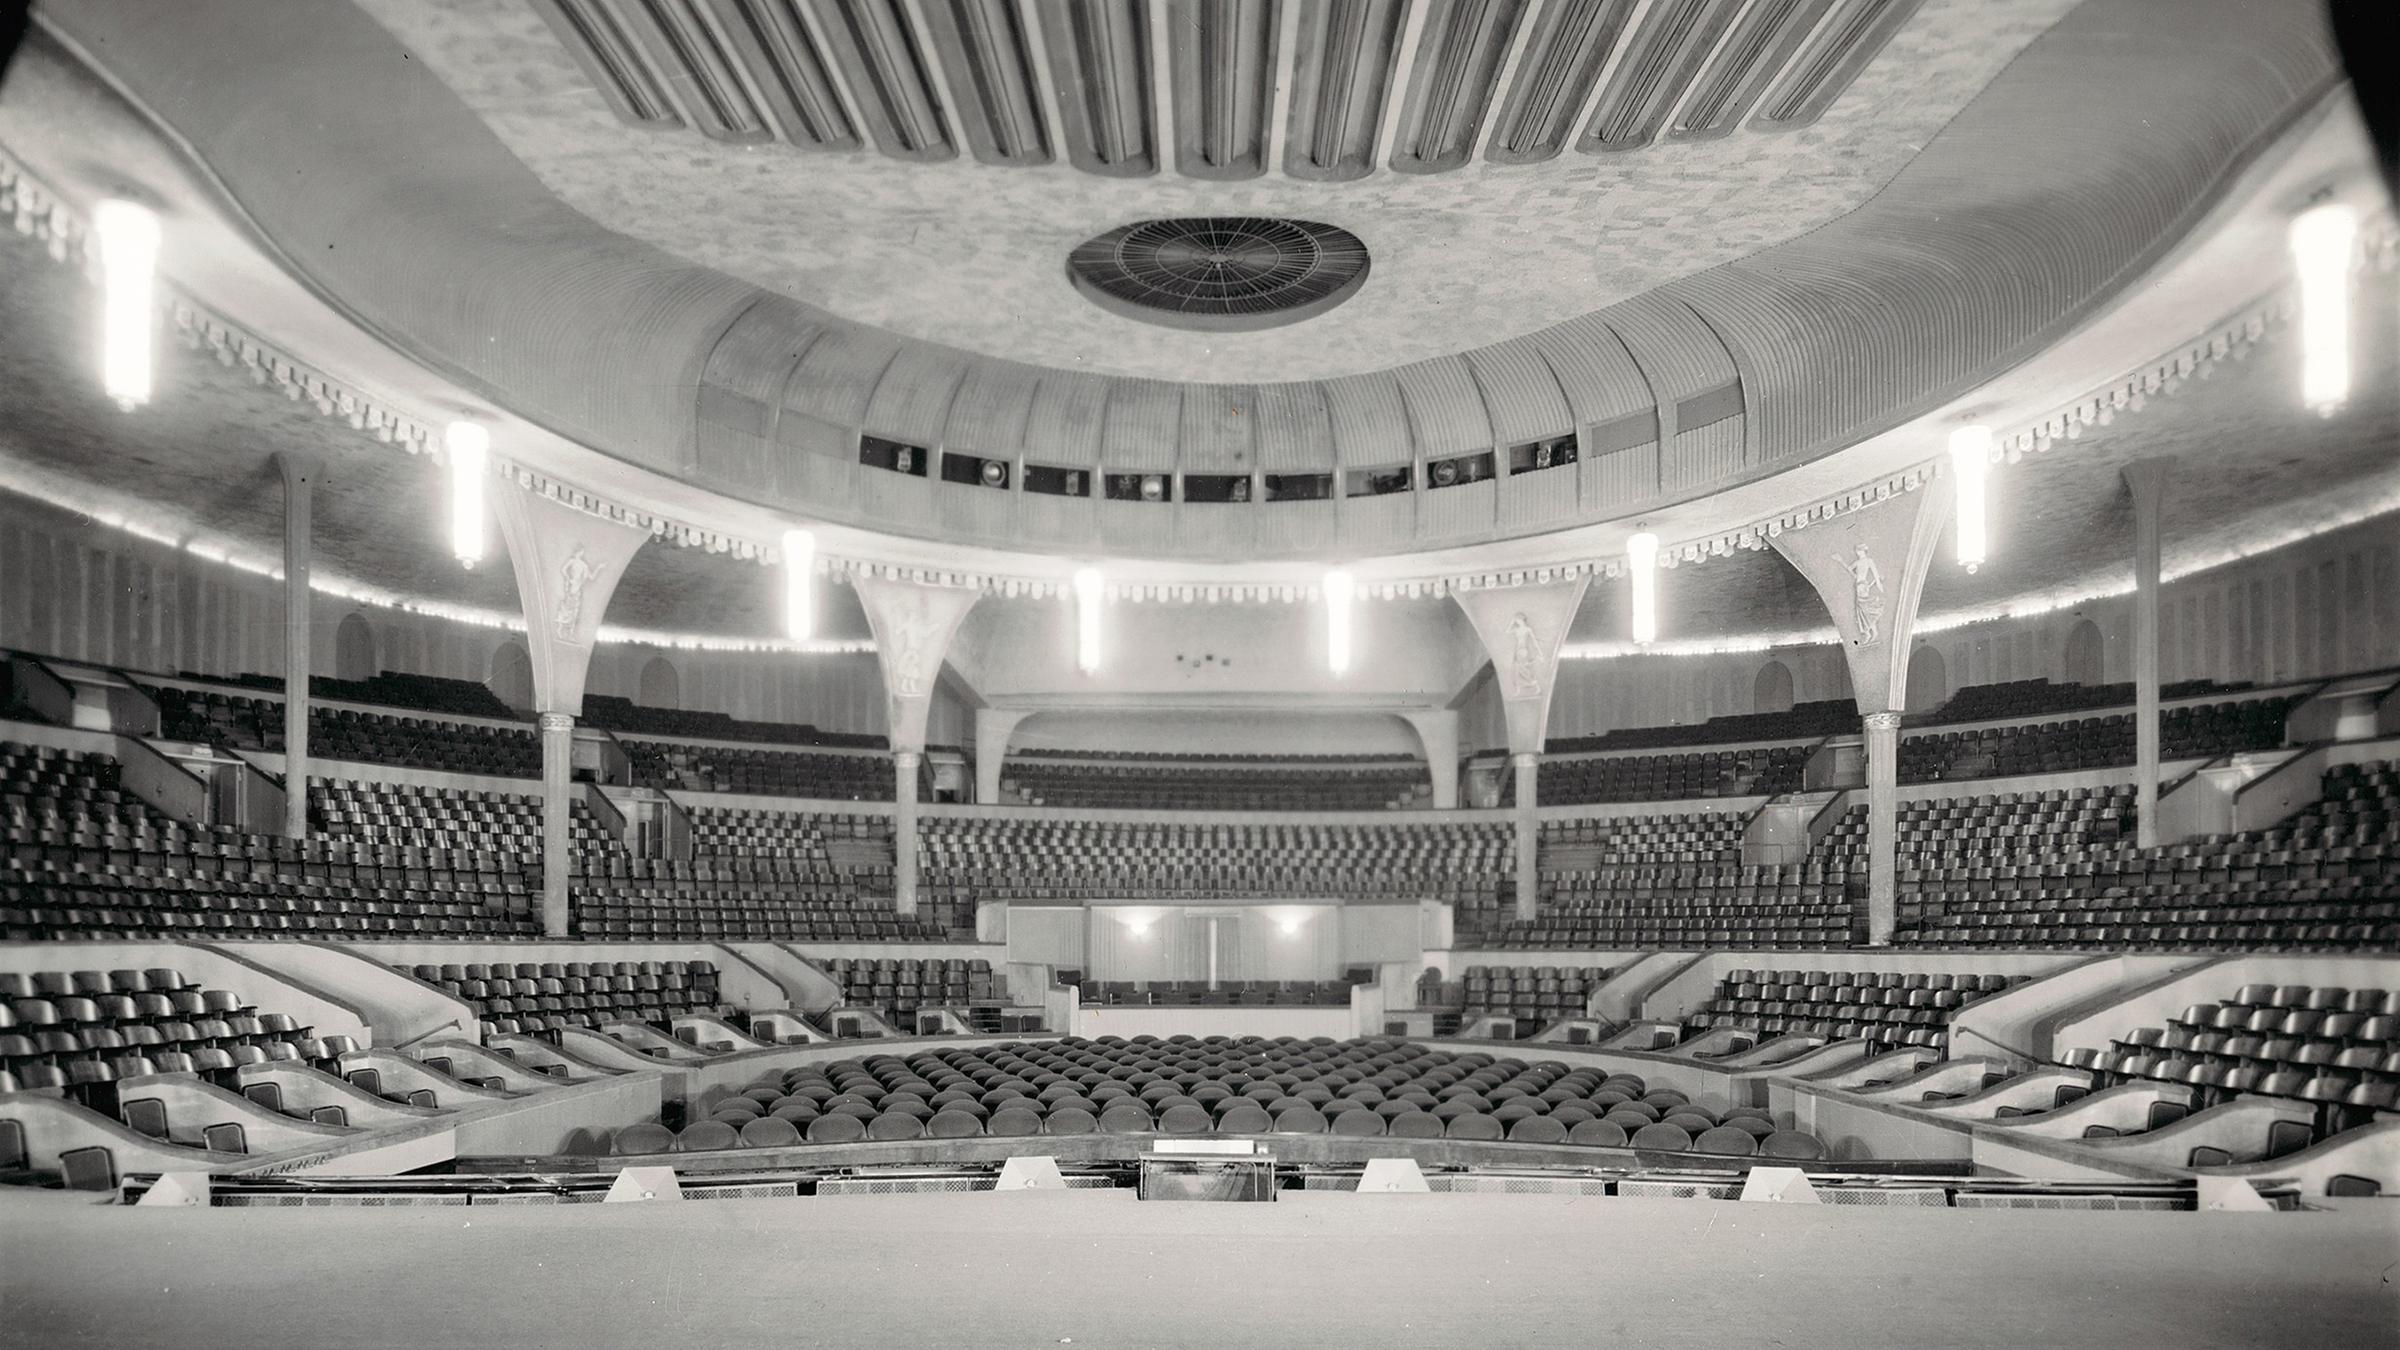 Saal des Theaters des Volkes nach dem Umbau 1938